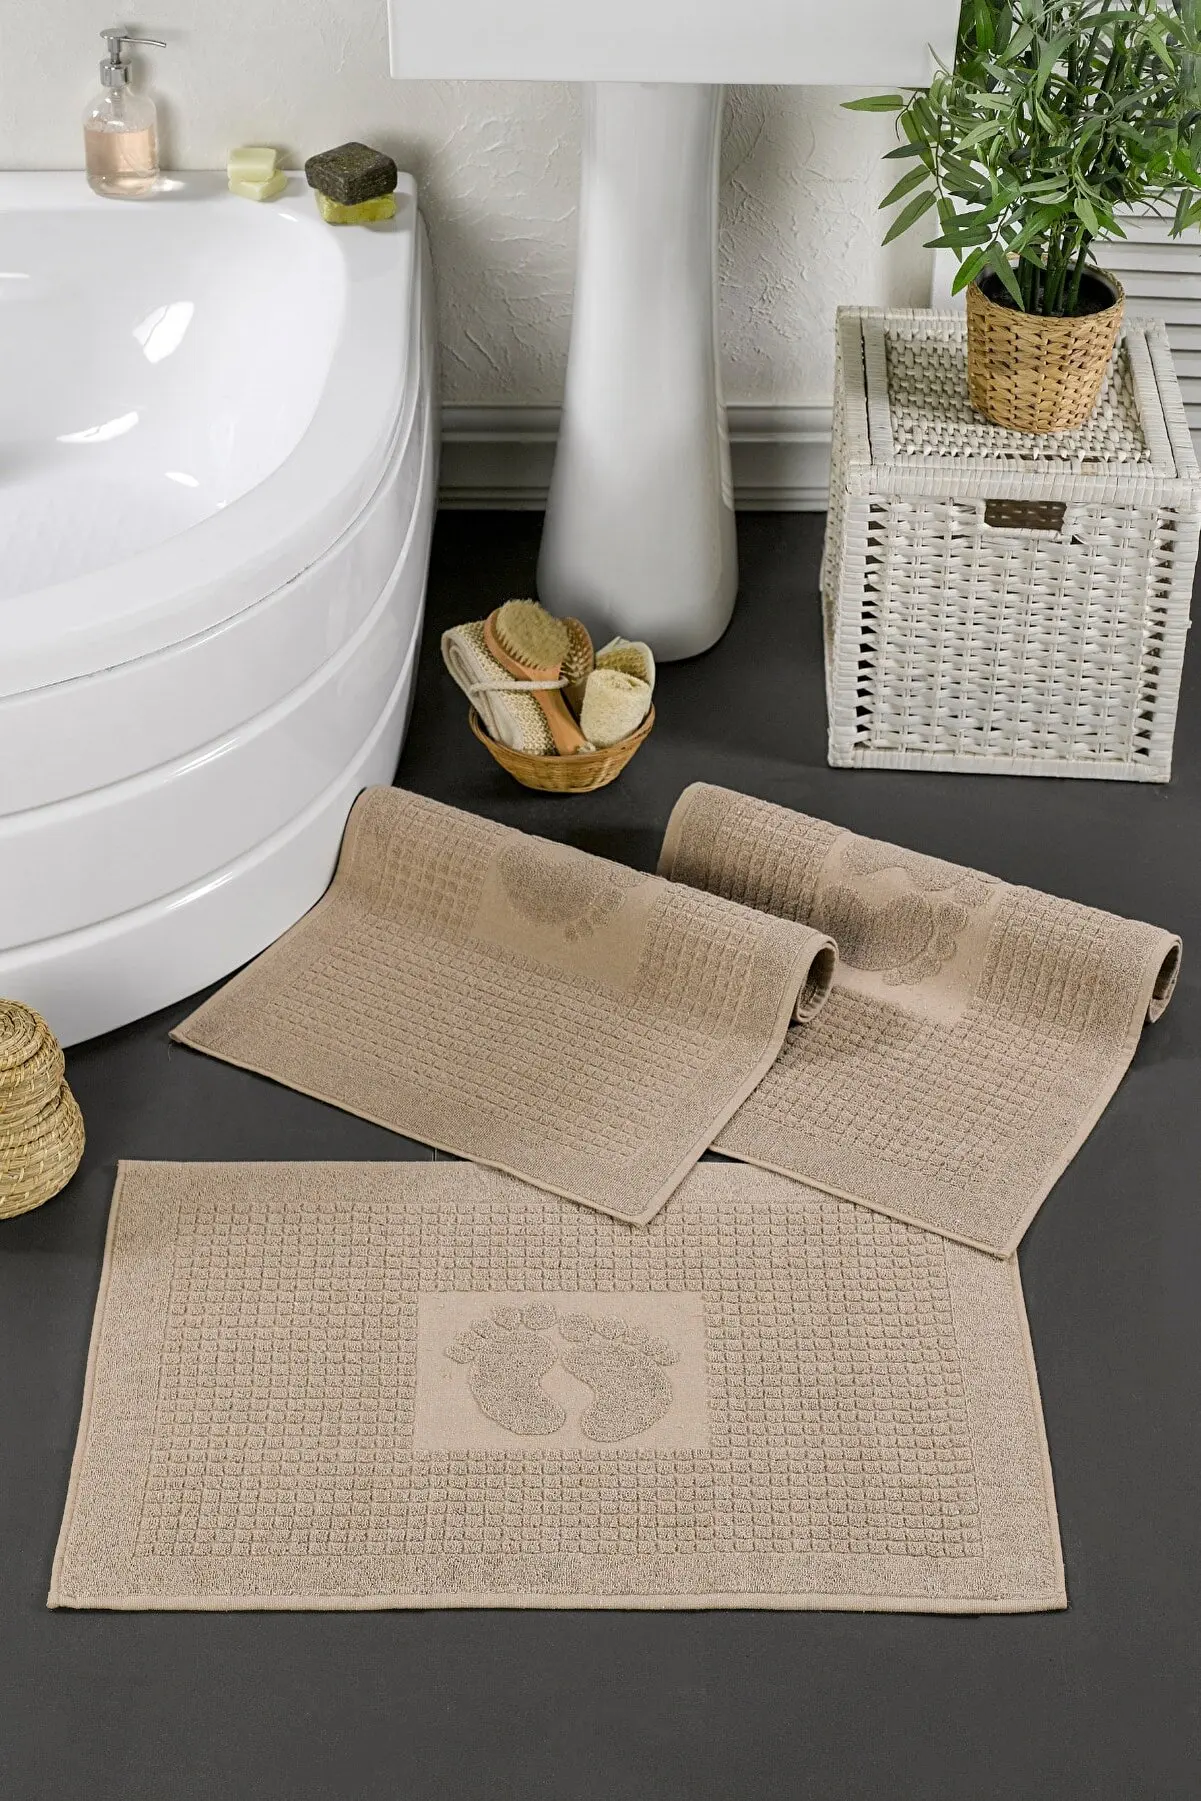 Footprint Cotton Home Hotel Floor Towel Ant-slip Spa Beauty Bath Mat for Bathroom  Toilet Bathtub Pad Absorbent Floor Mat 80x50cm - AliExpress